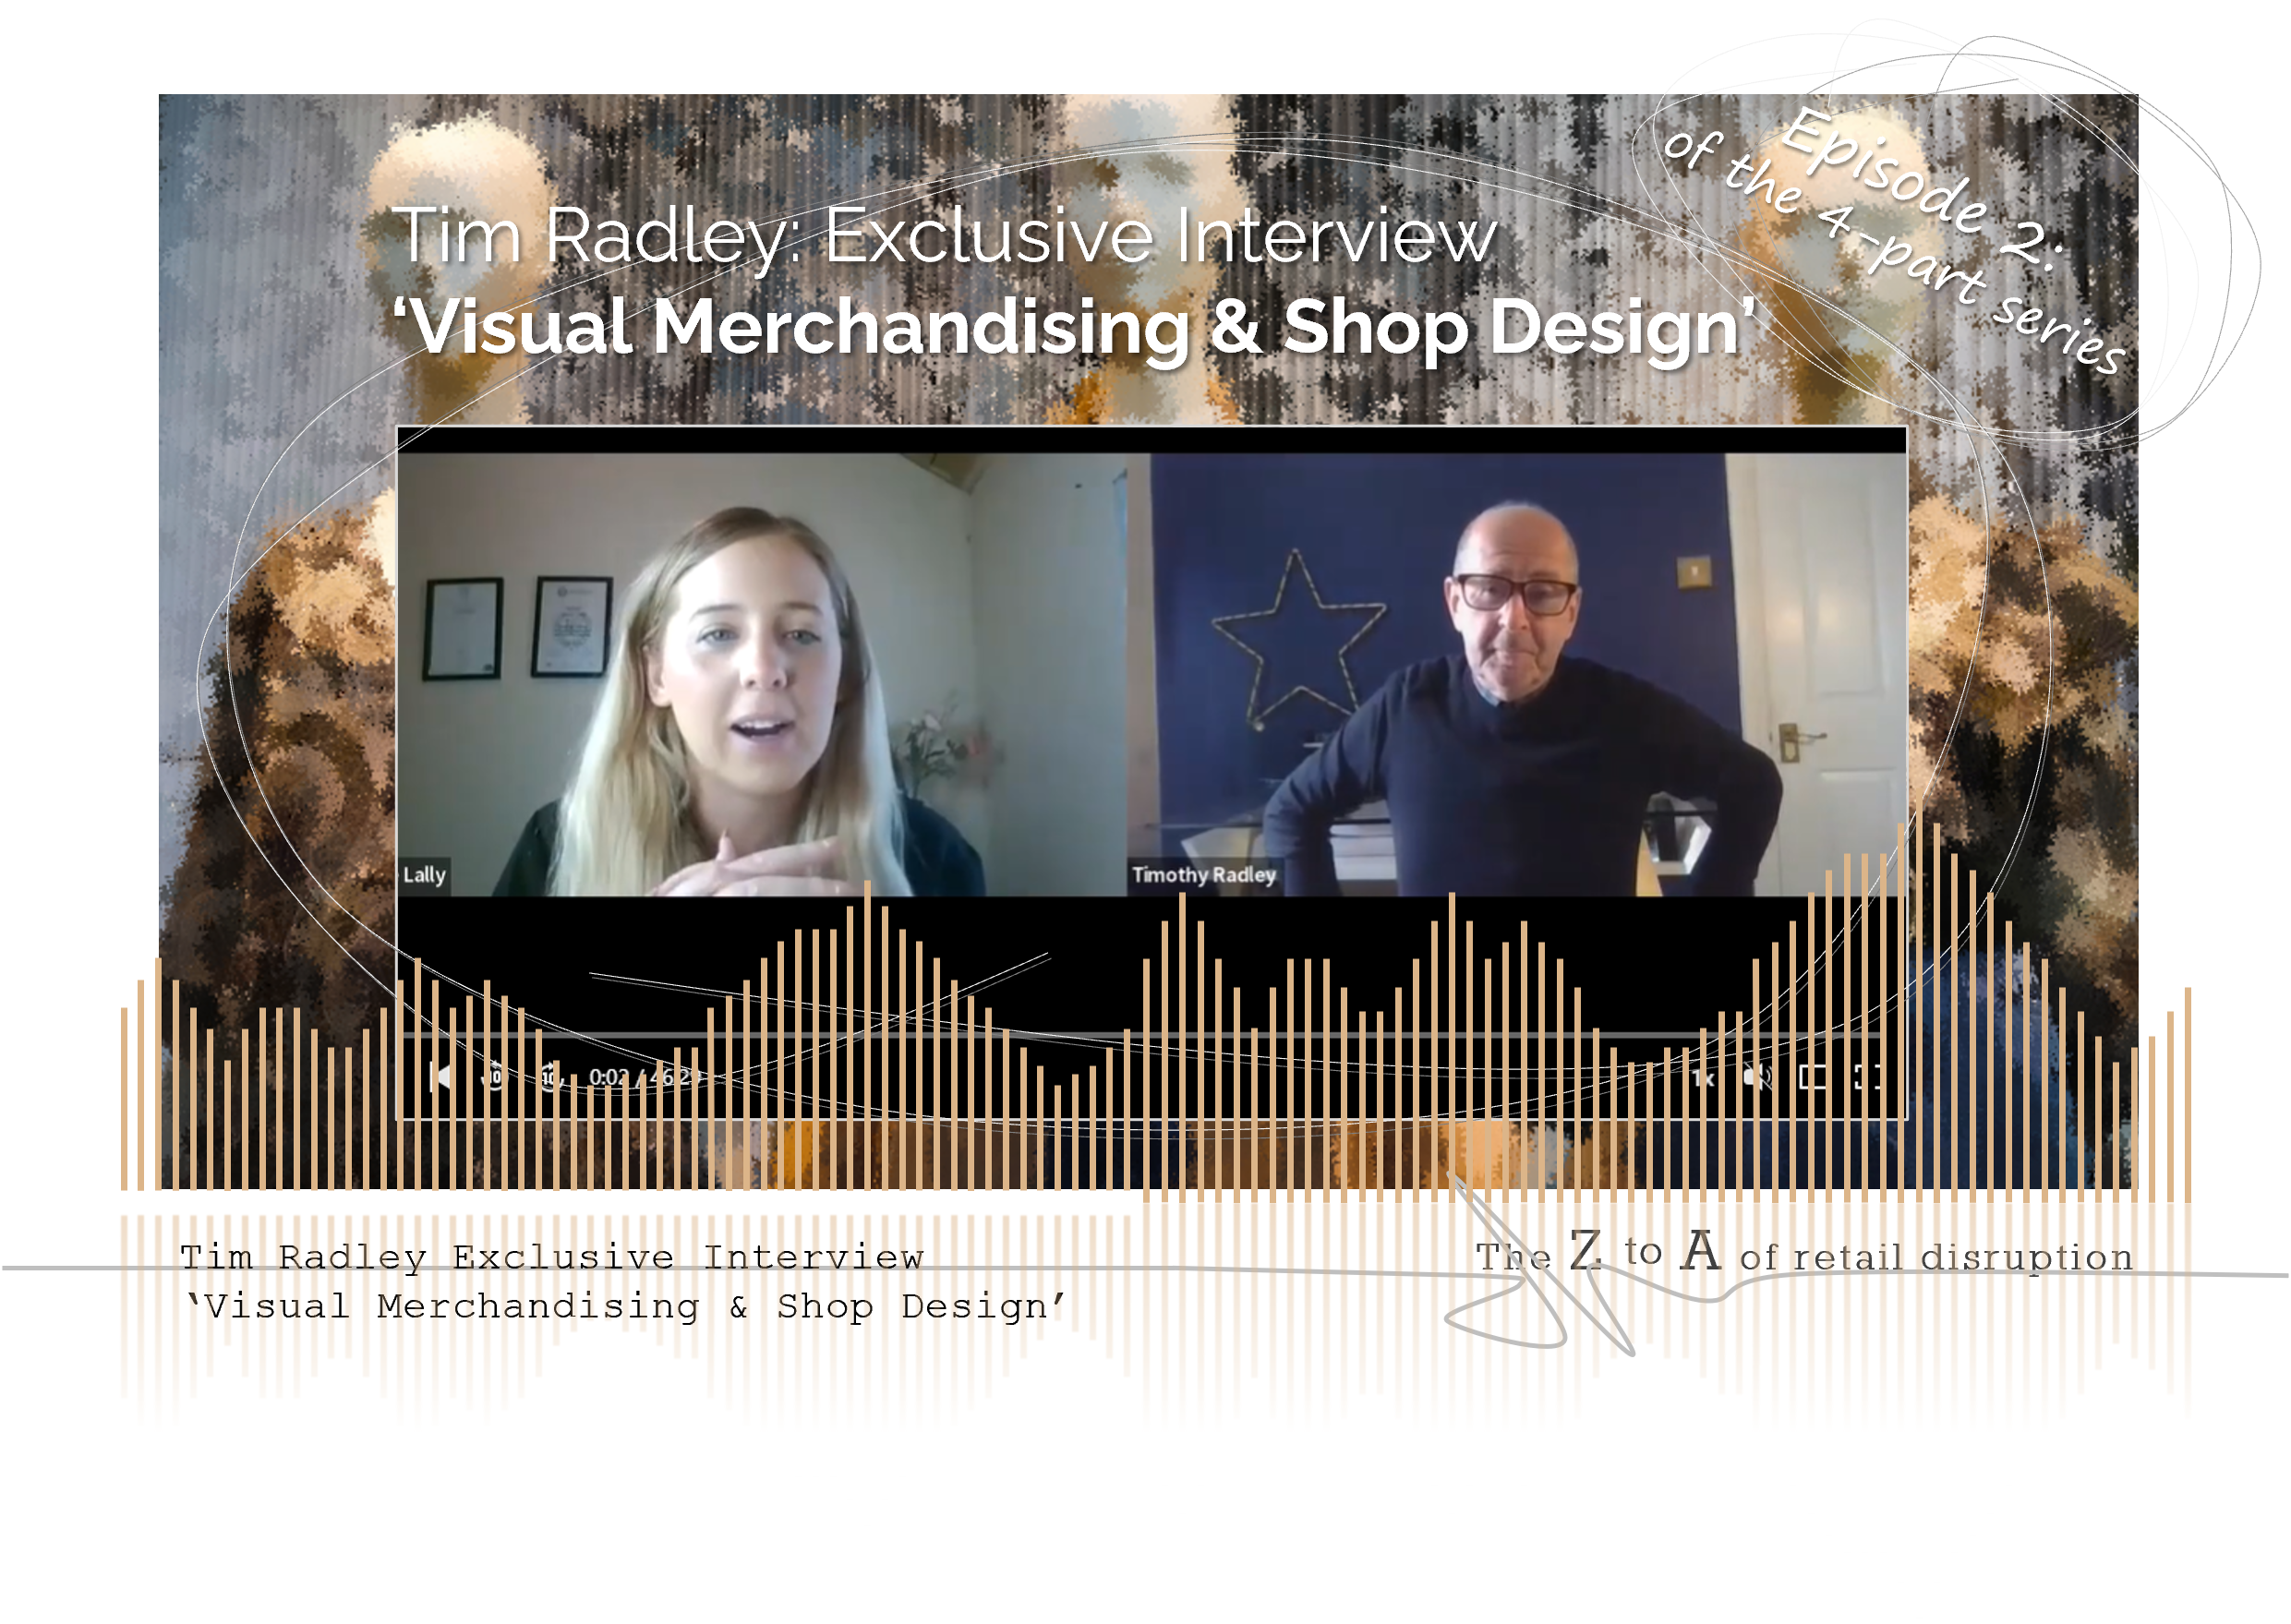 Exclusive Interview with Tim Radley: Visual merchandising & shop design